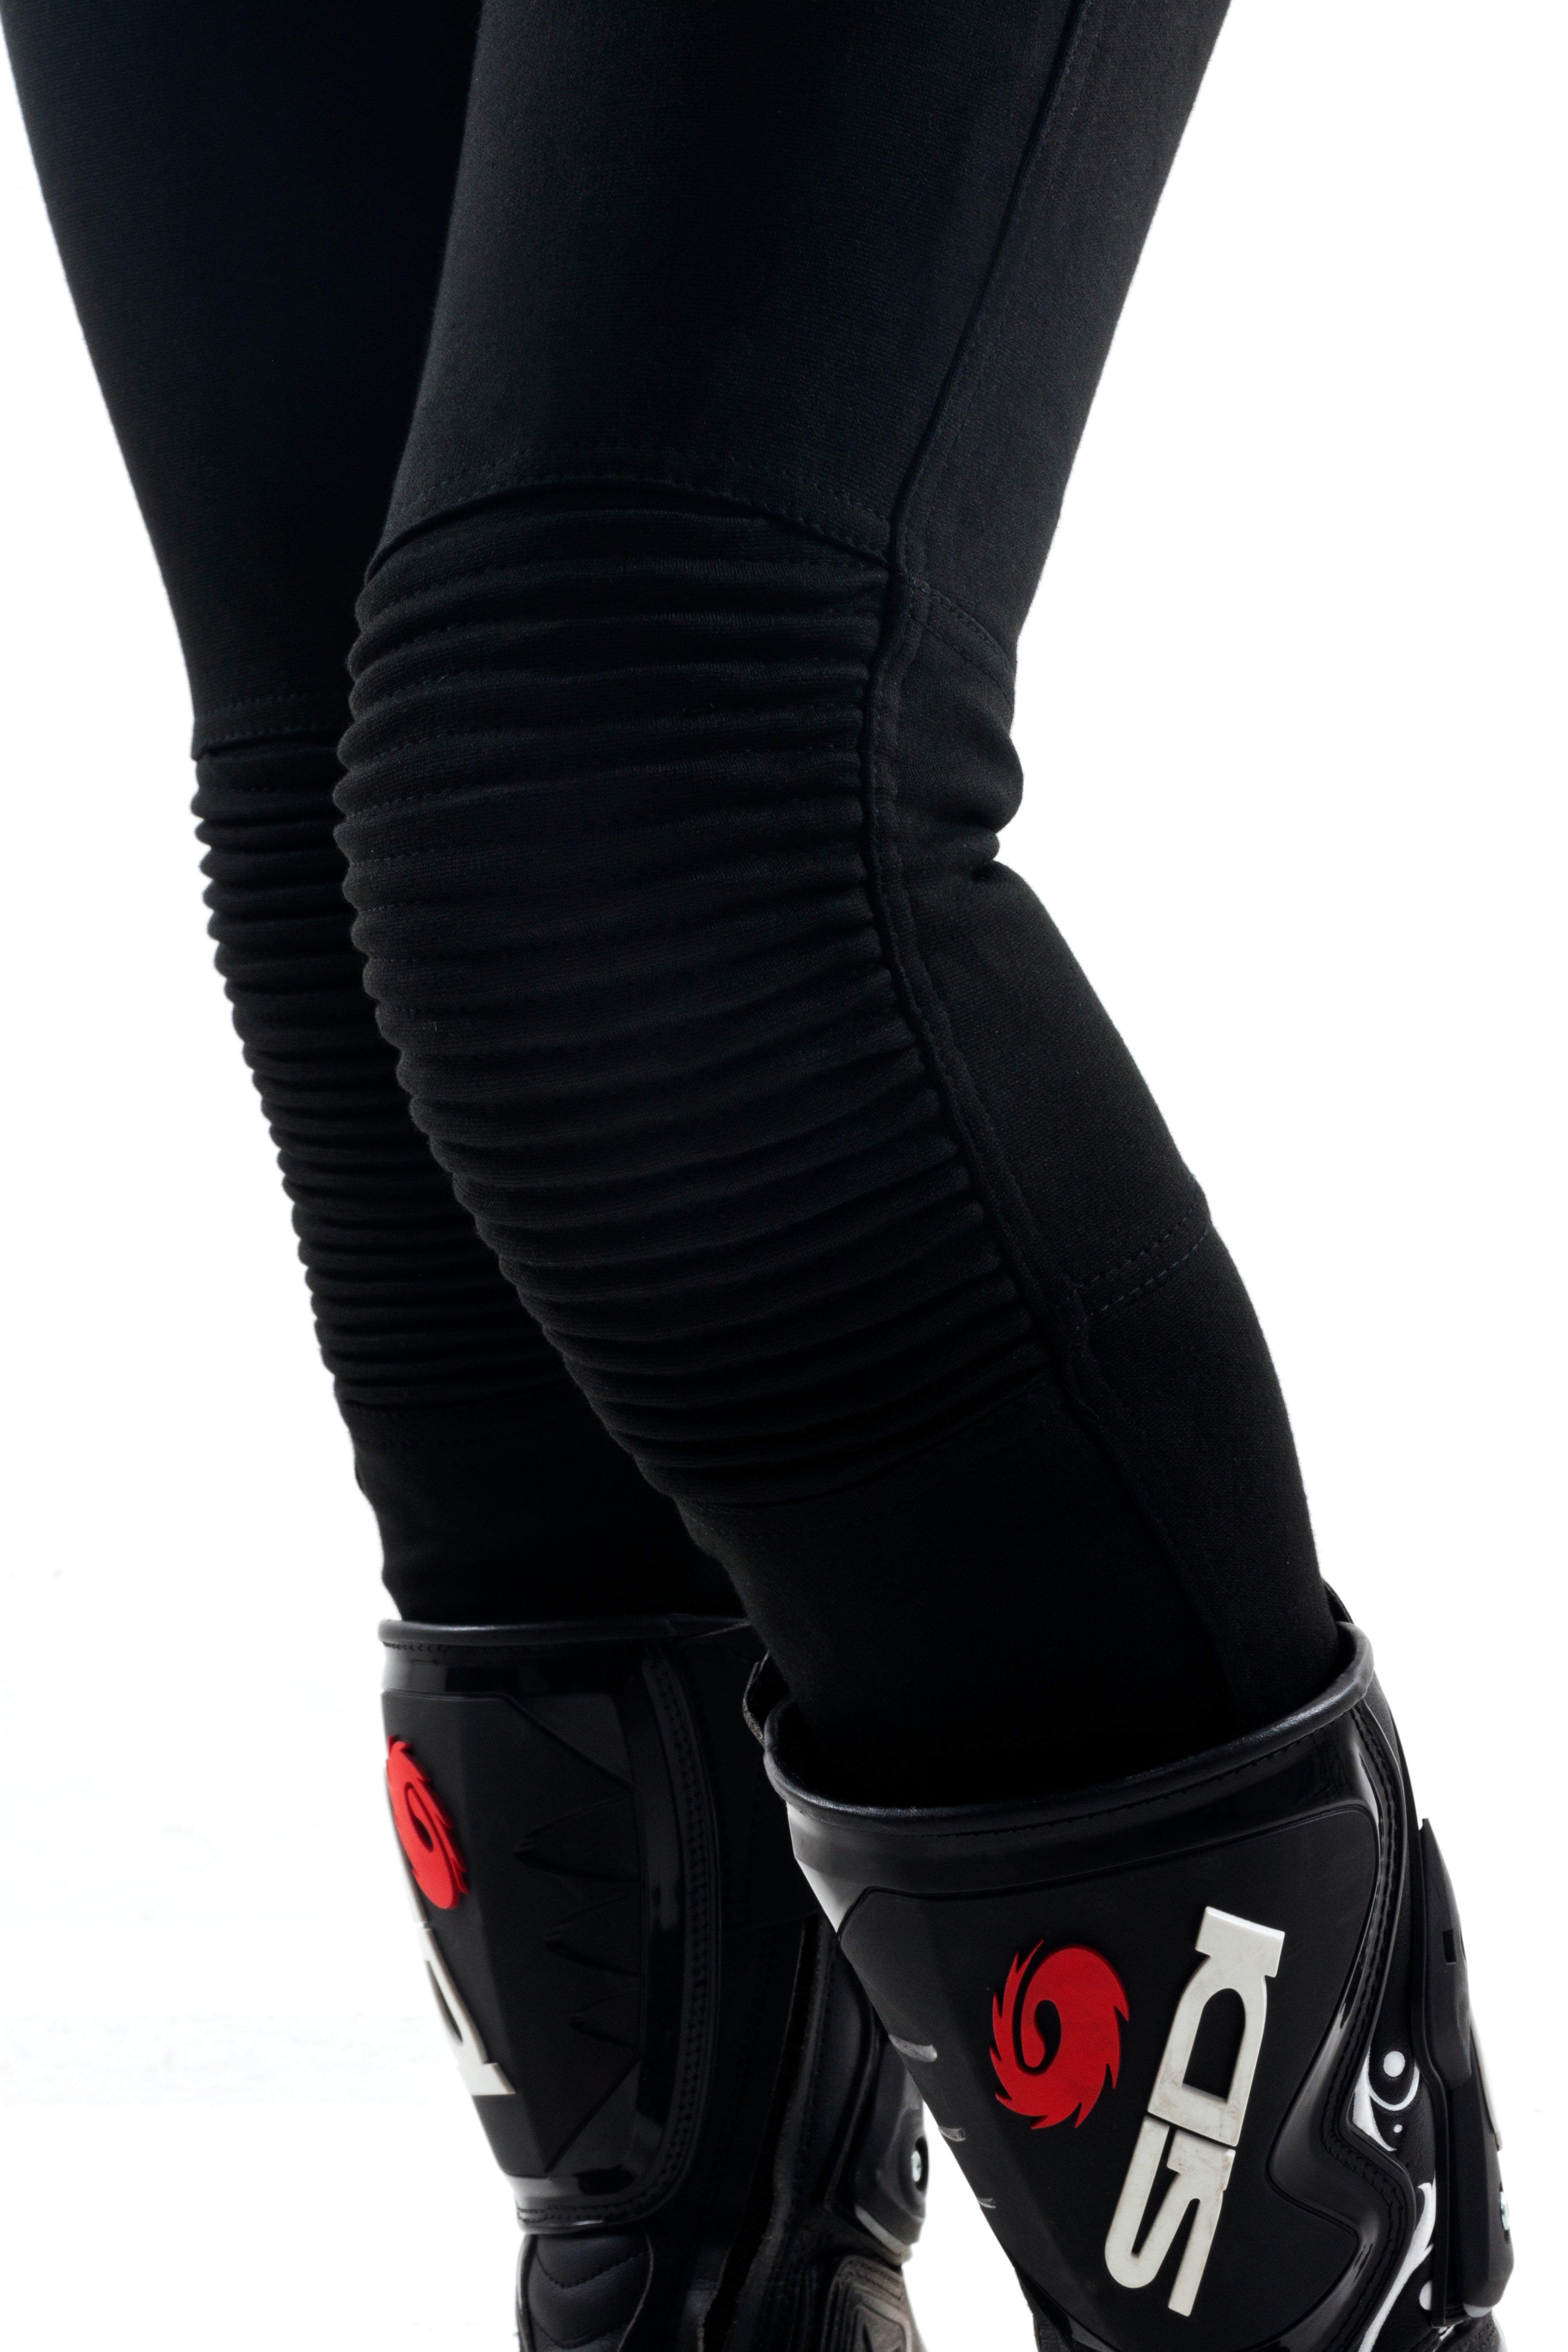 Ladies Motorcycle Ribbed Knee Design Leggings from Moto Girl – Moto Lounge